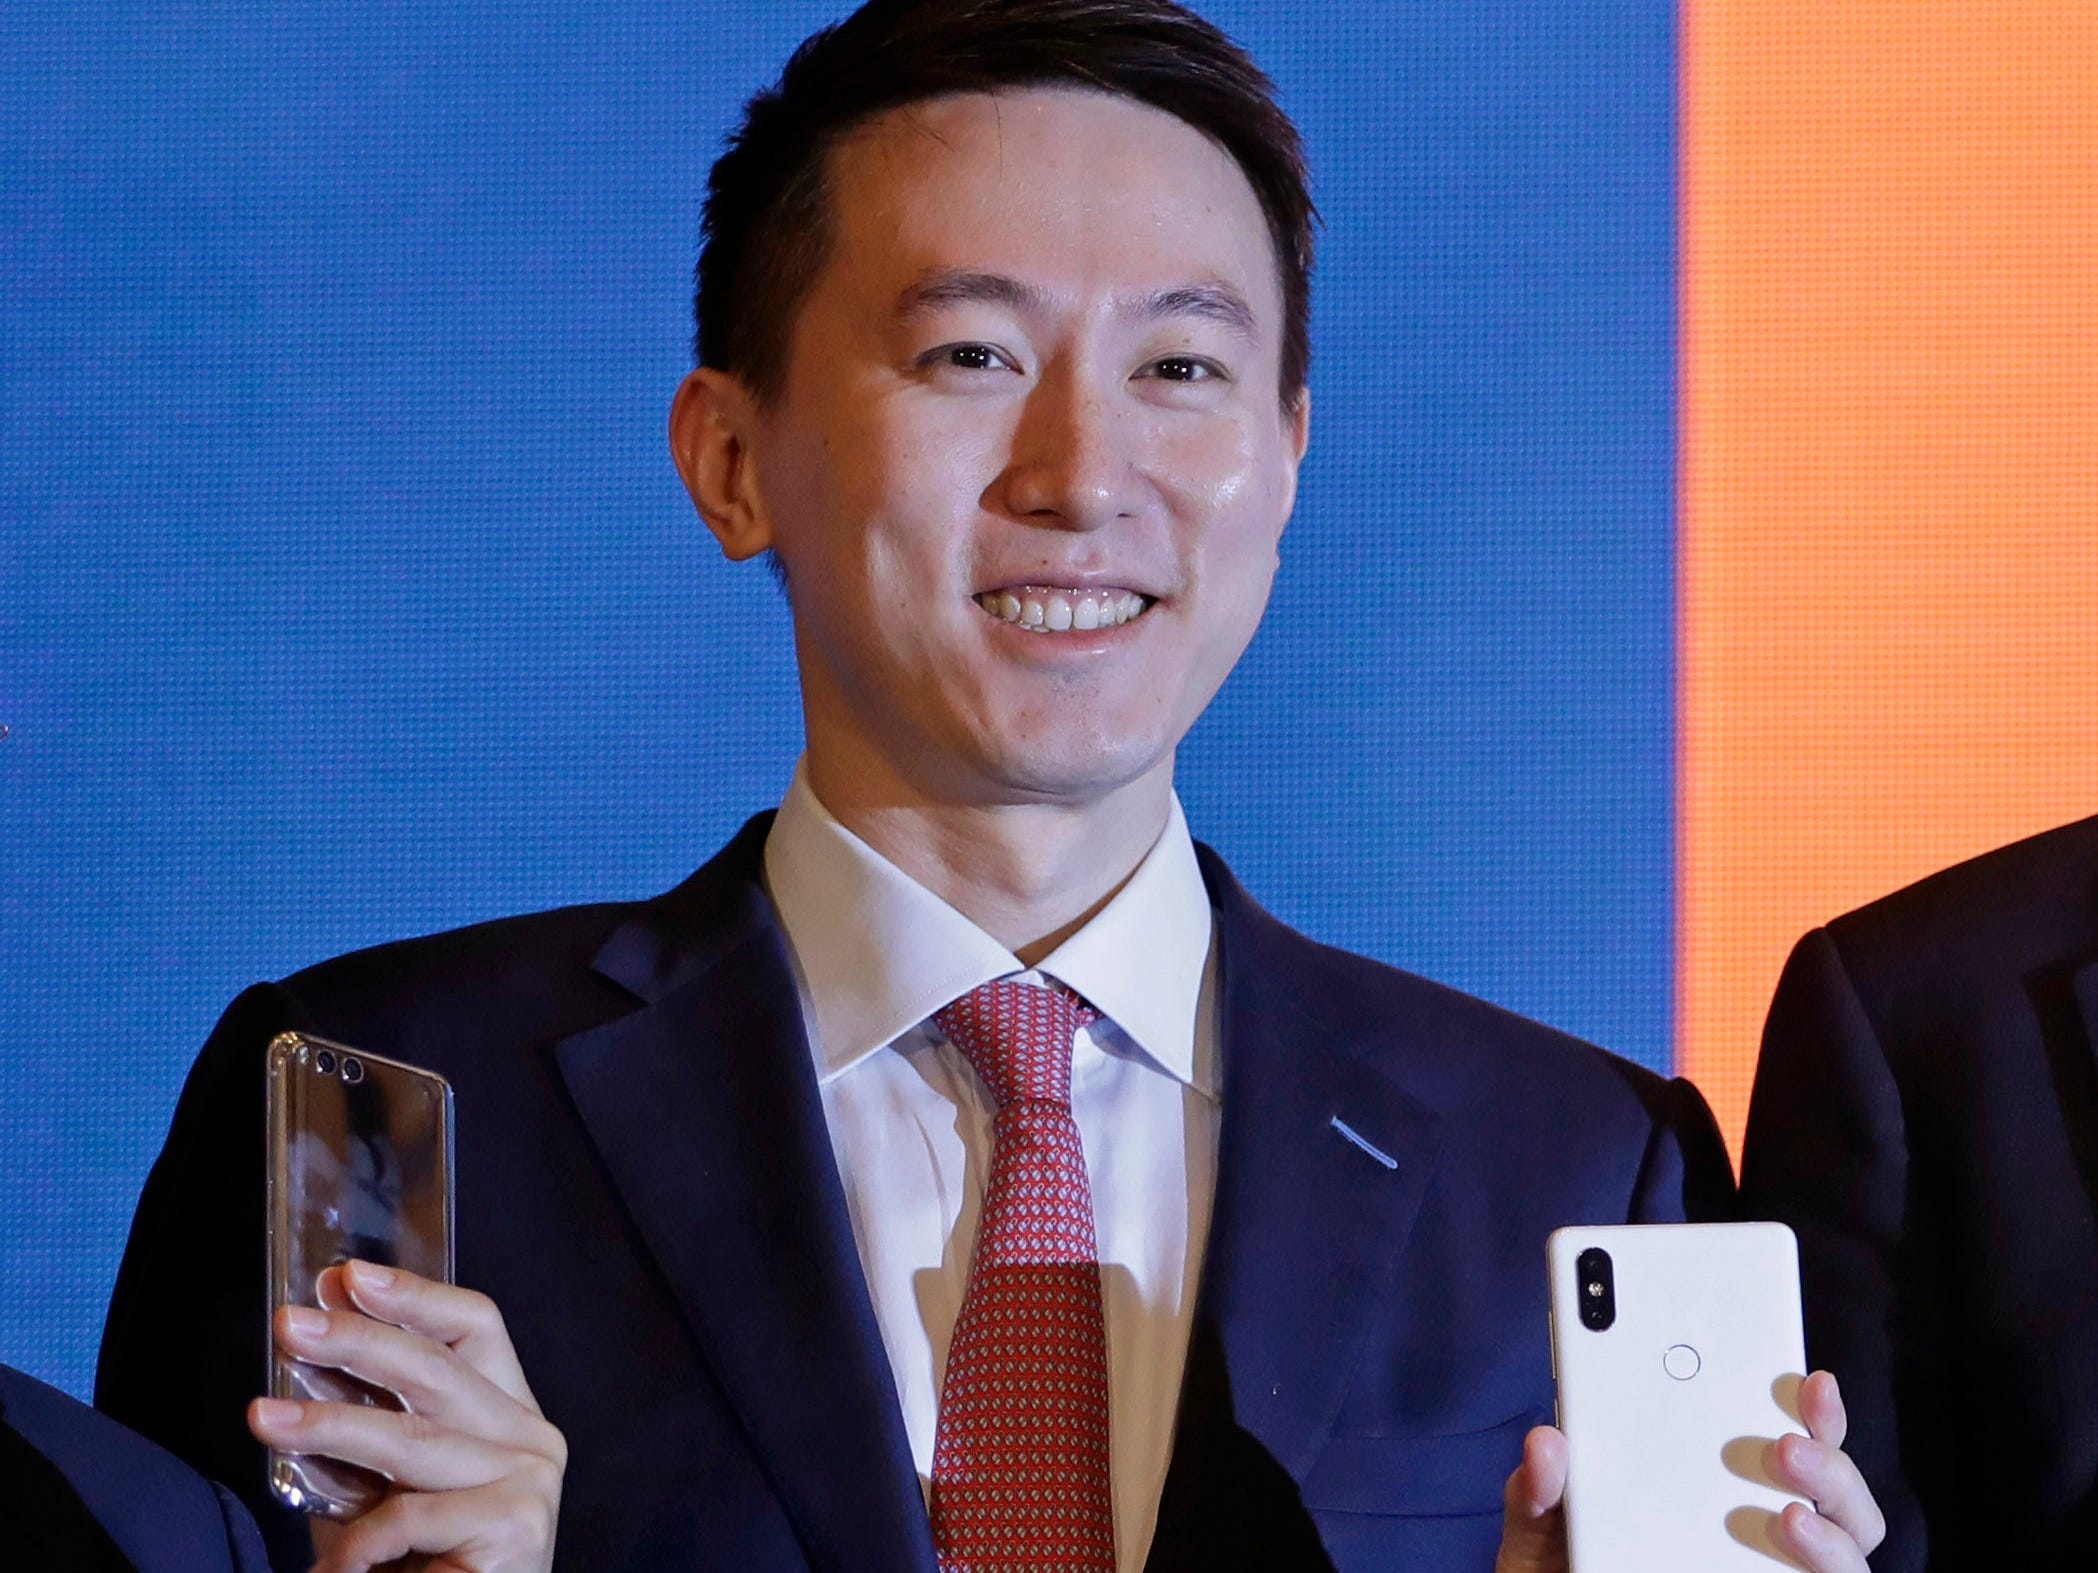 Meet Shou Zi Chew, TikTok's 39yearold CEO who got his start at